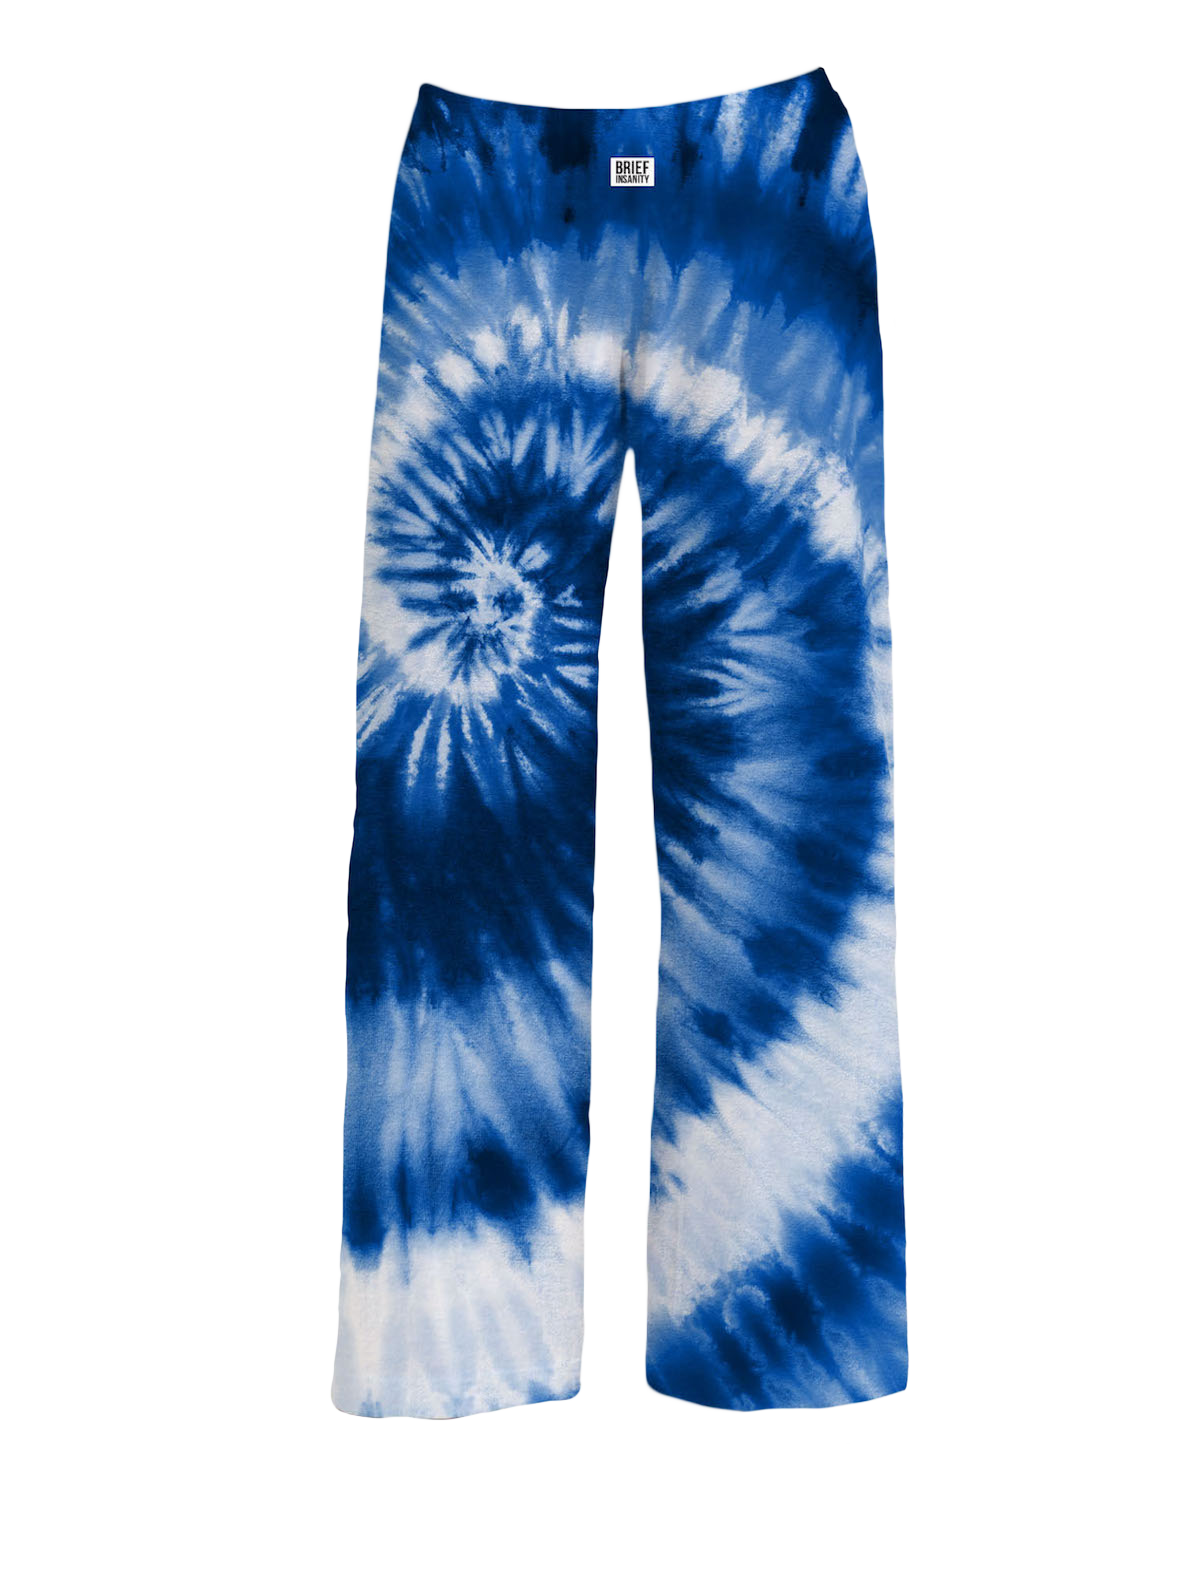 Blue and White Tie-Dye Lounge Pants: Medium